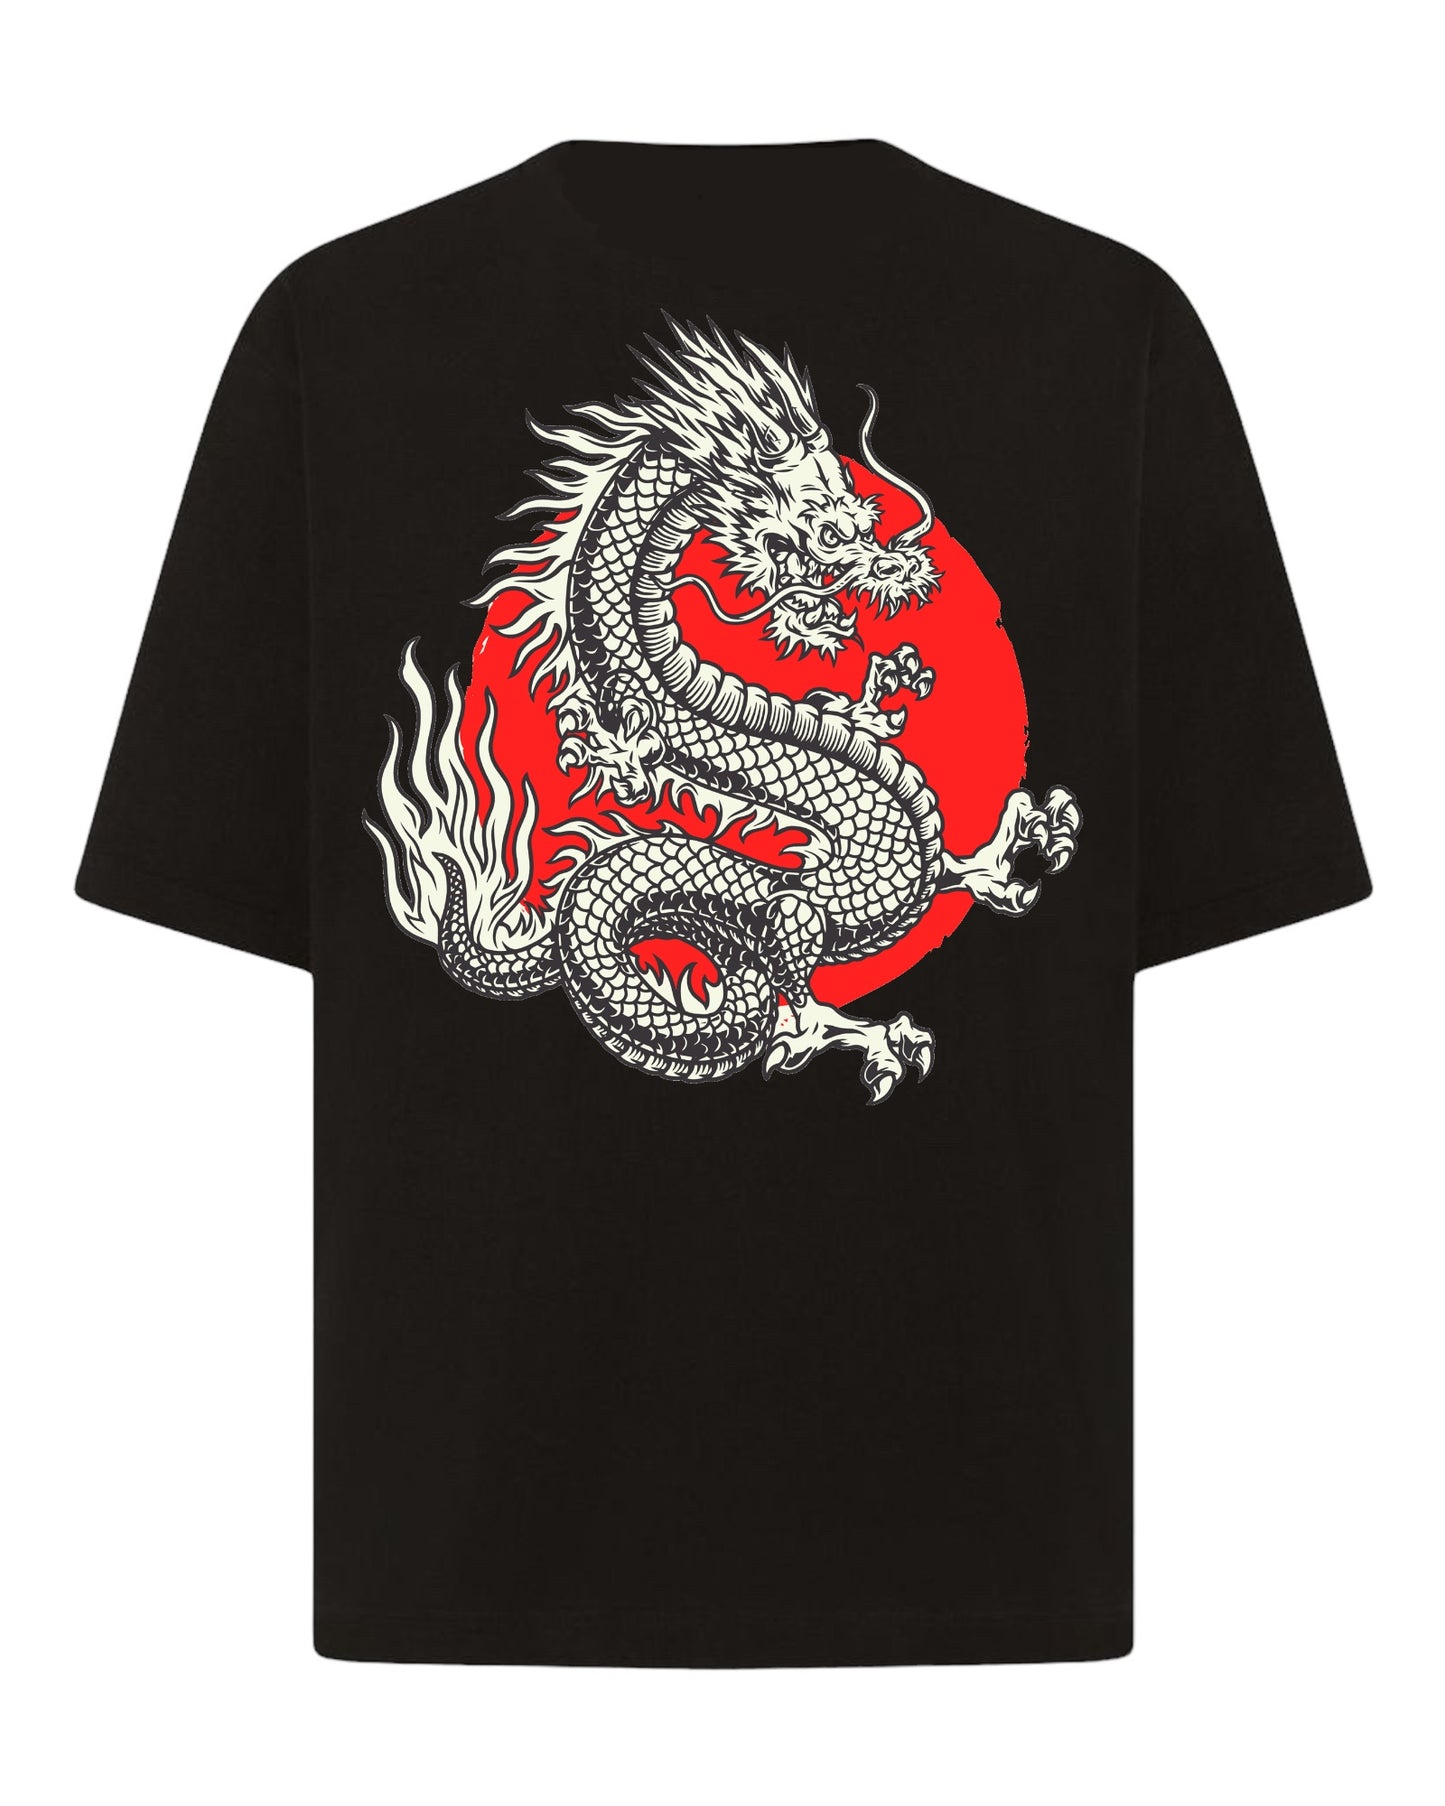 "Tempestuous Dragon: Wrath Unleashed" Unisex Oversized T-Shirt